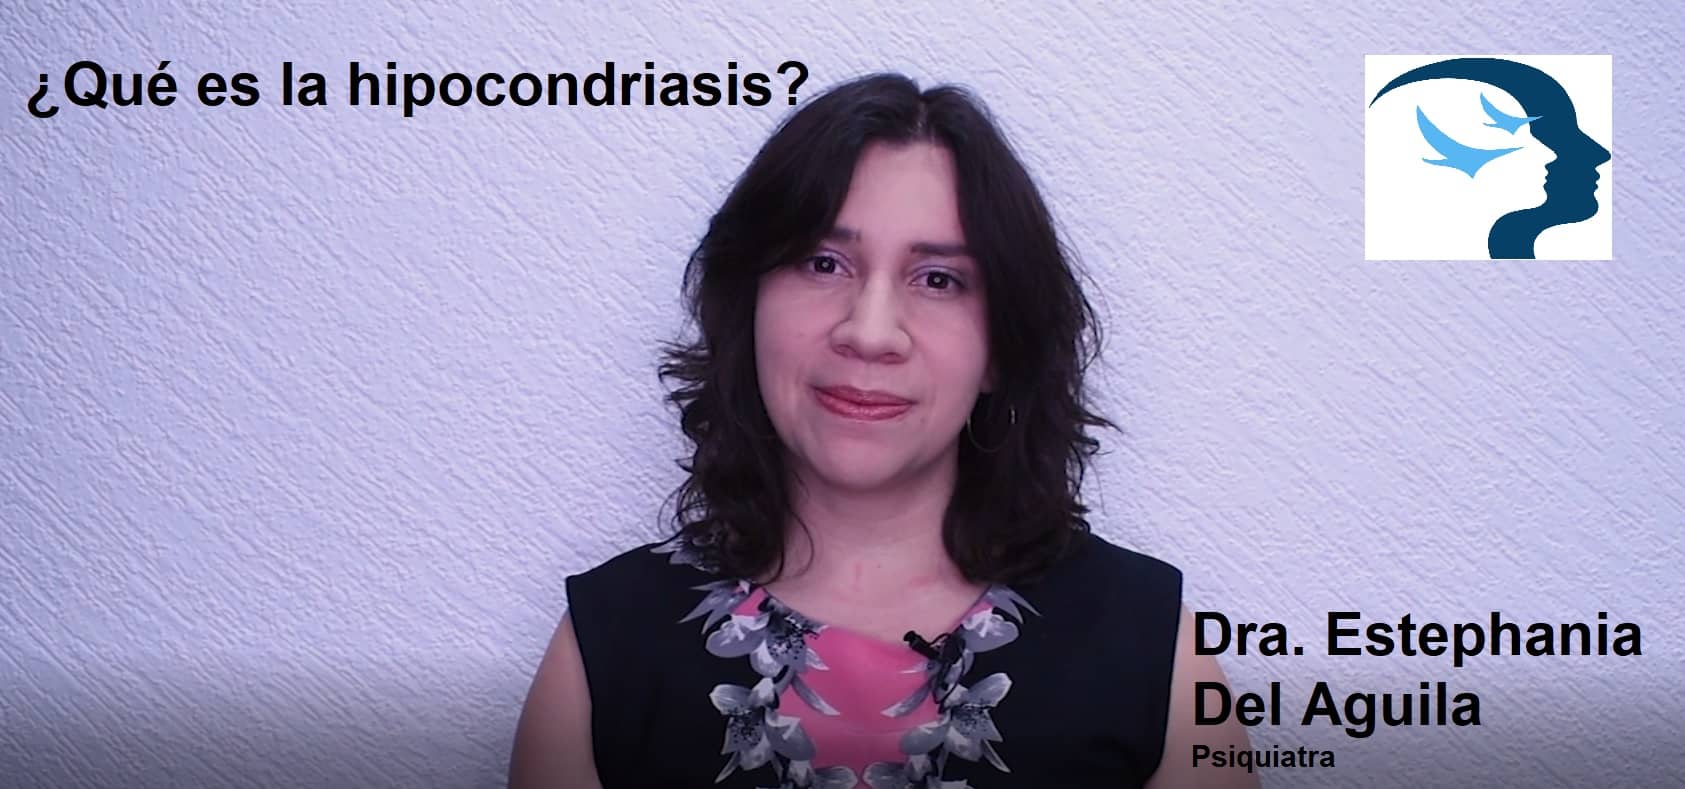 Hipocondriasis - Salud Emocional - Dra. Estephania del Águila - Psiquiatra